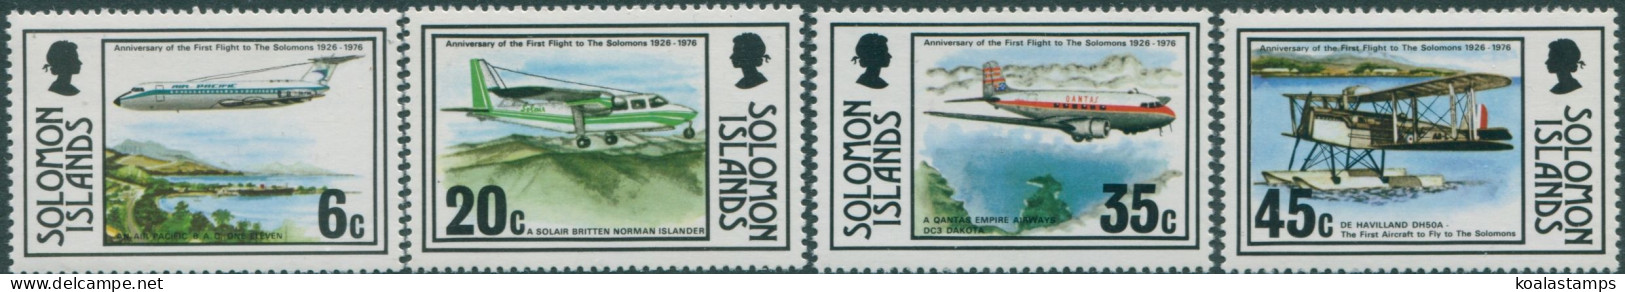 Solomon Islands 1976 SG330-333 First Flight Set MNH - Solomon Islands (1978-...)